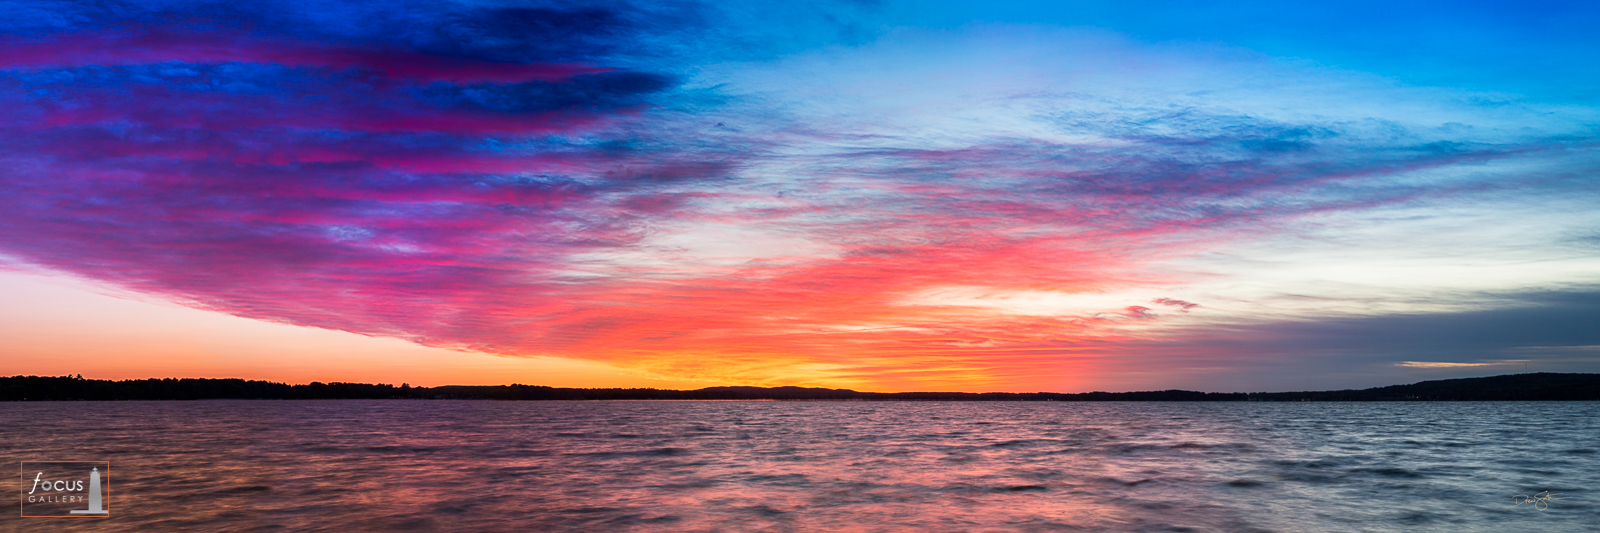 Colorful sunrise over Bear Lake, Michigan.